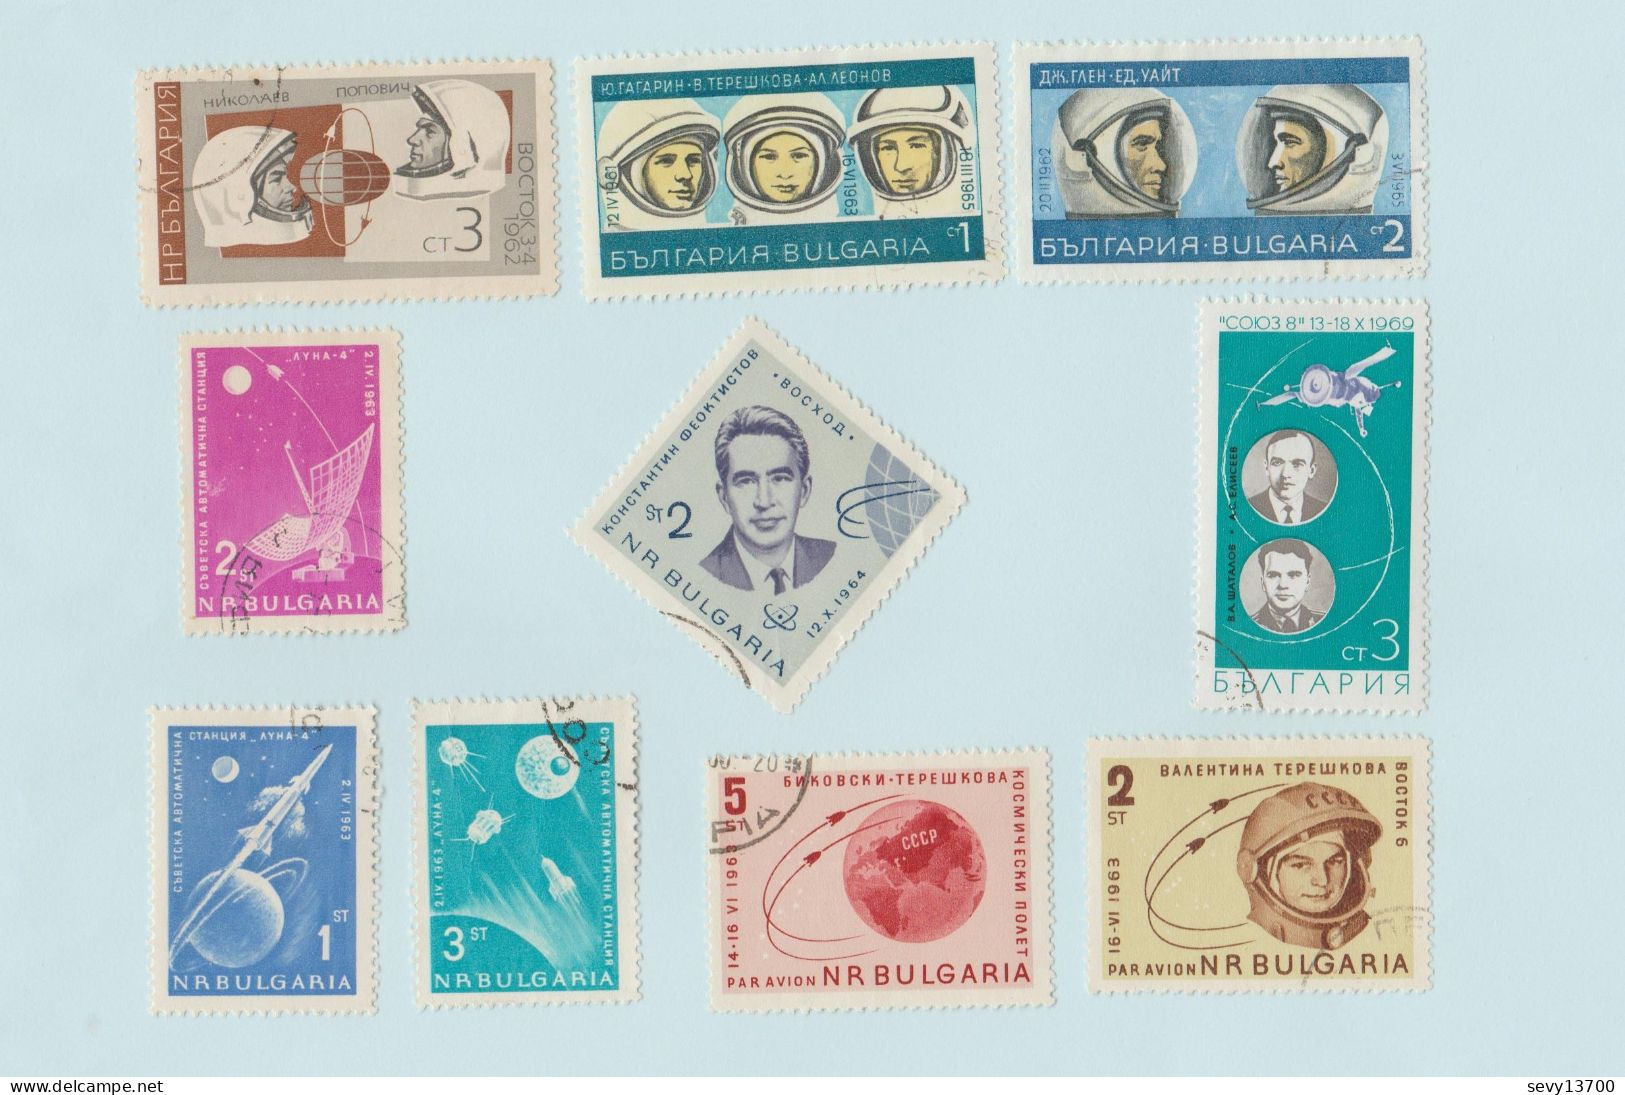 Bulgarie - lot de 117 timbres